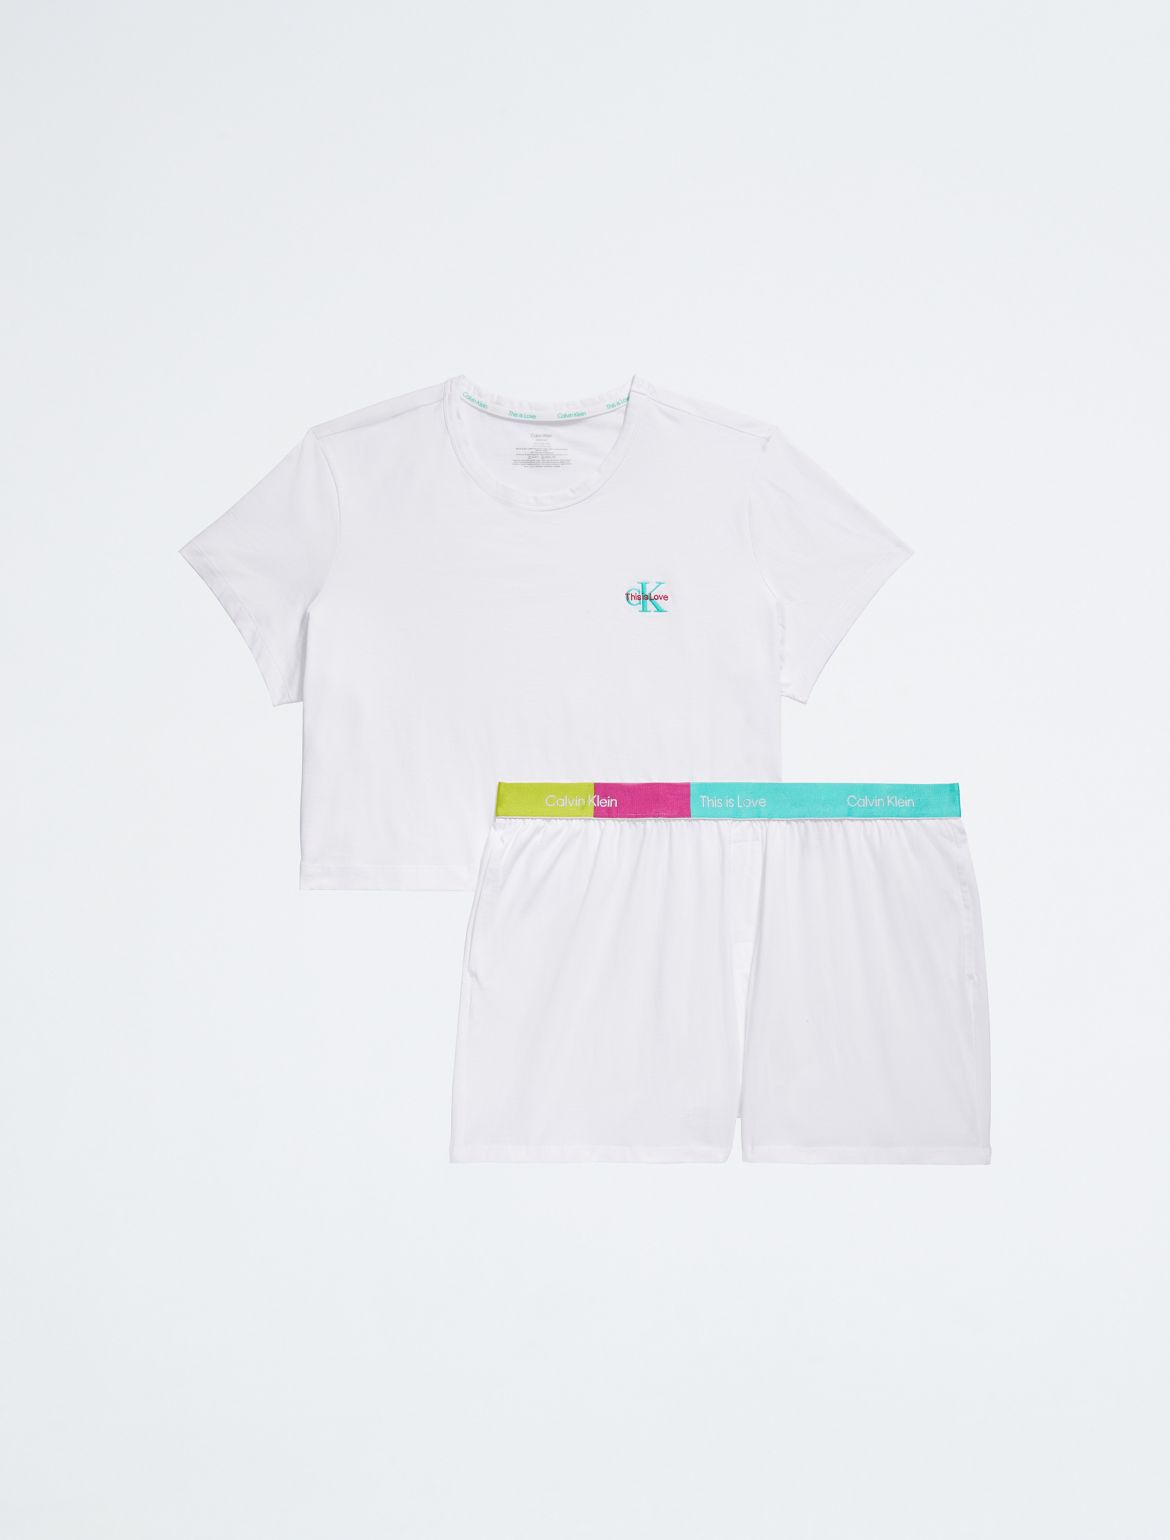 Calvin Klein Women's Pride This Is Love Plus Size Sleep T-Shirt + Shorts Set - White - 3X